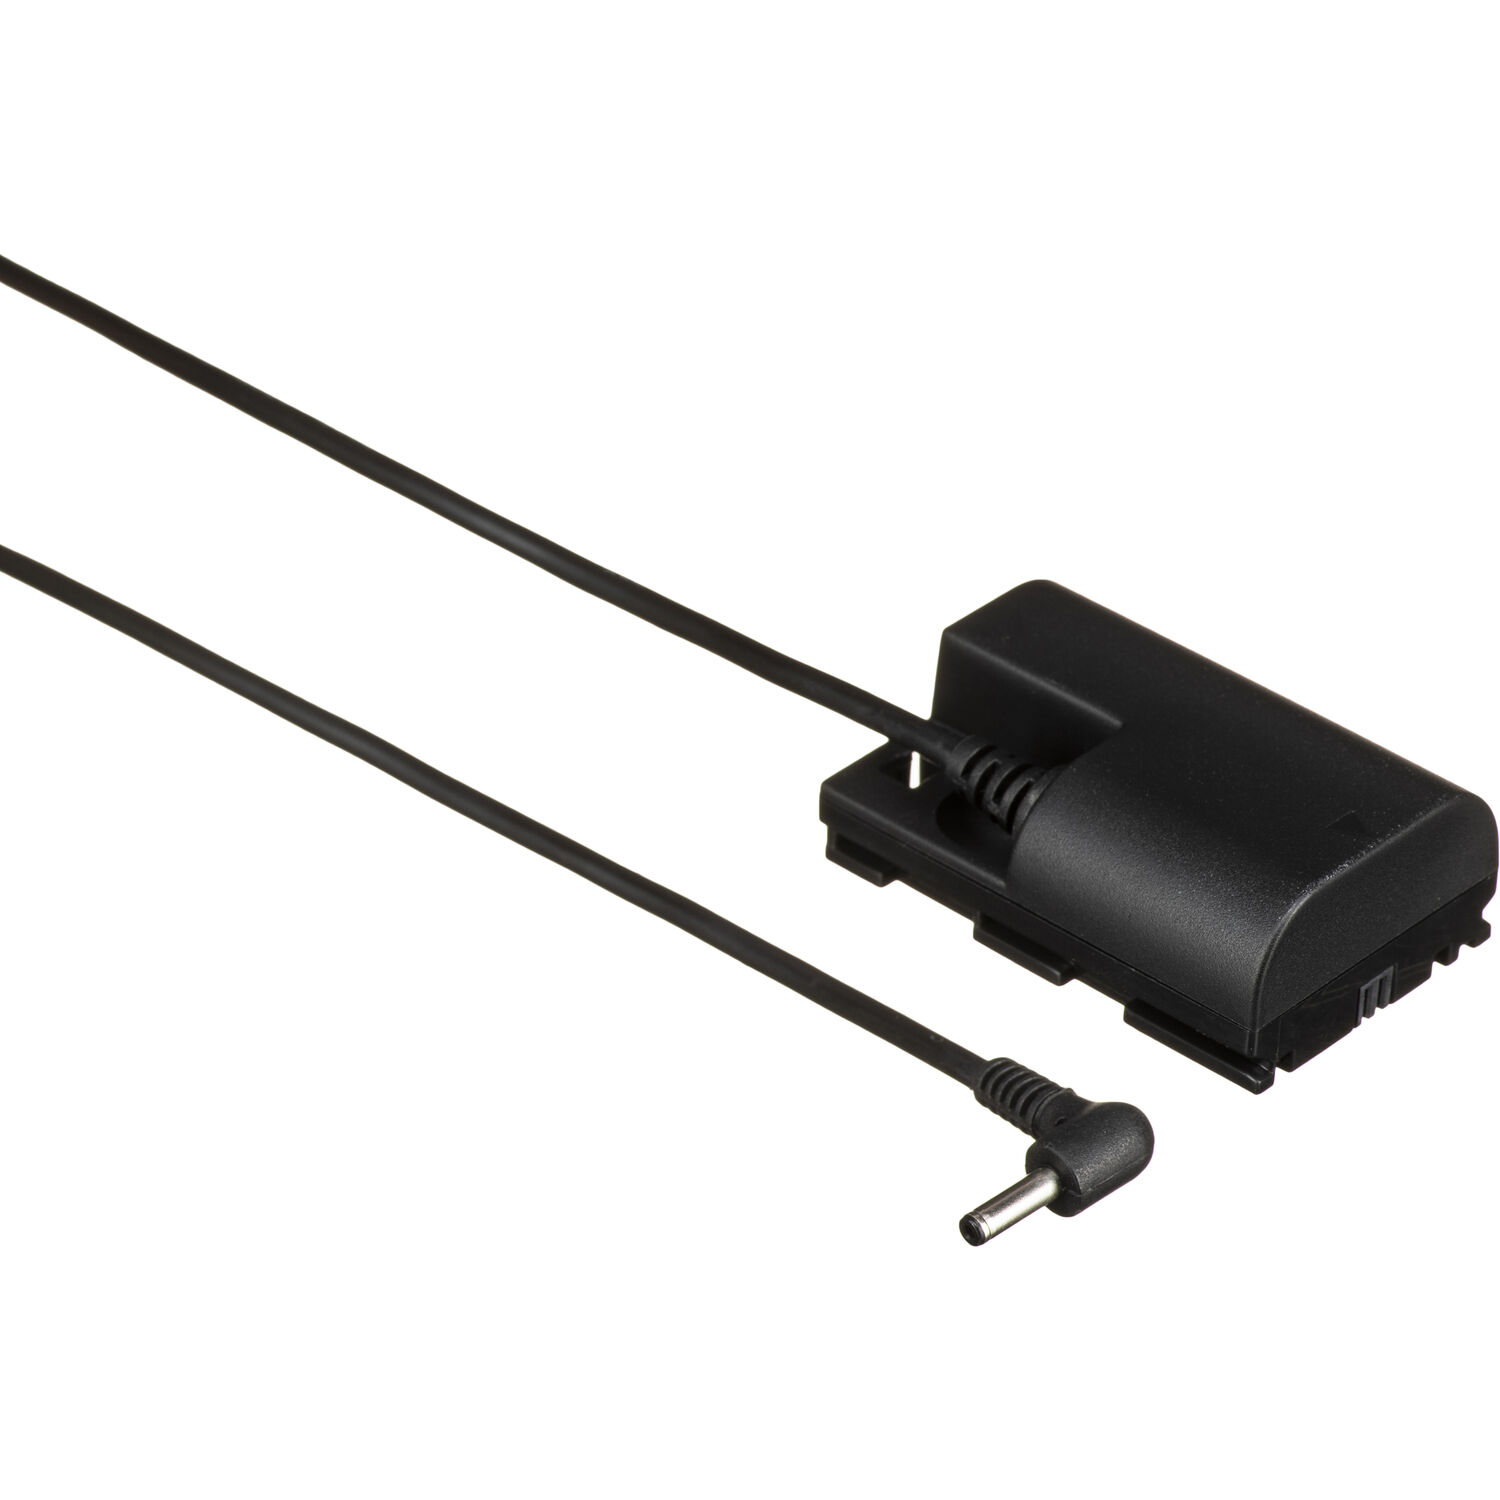 Tilta Canon LP-E6 Dummy Battery to 3.5 x 1.35mm DC Male Cable